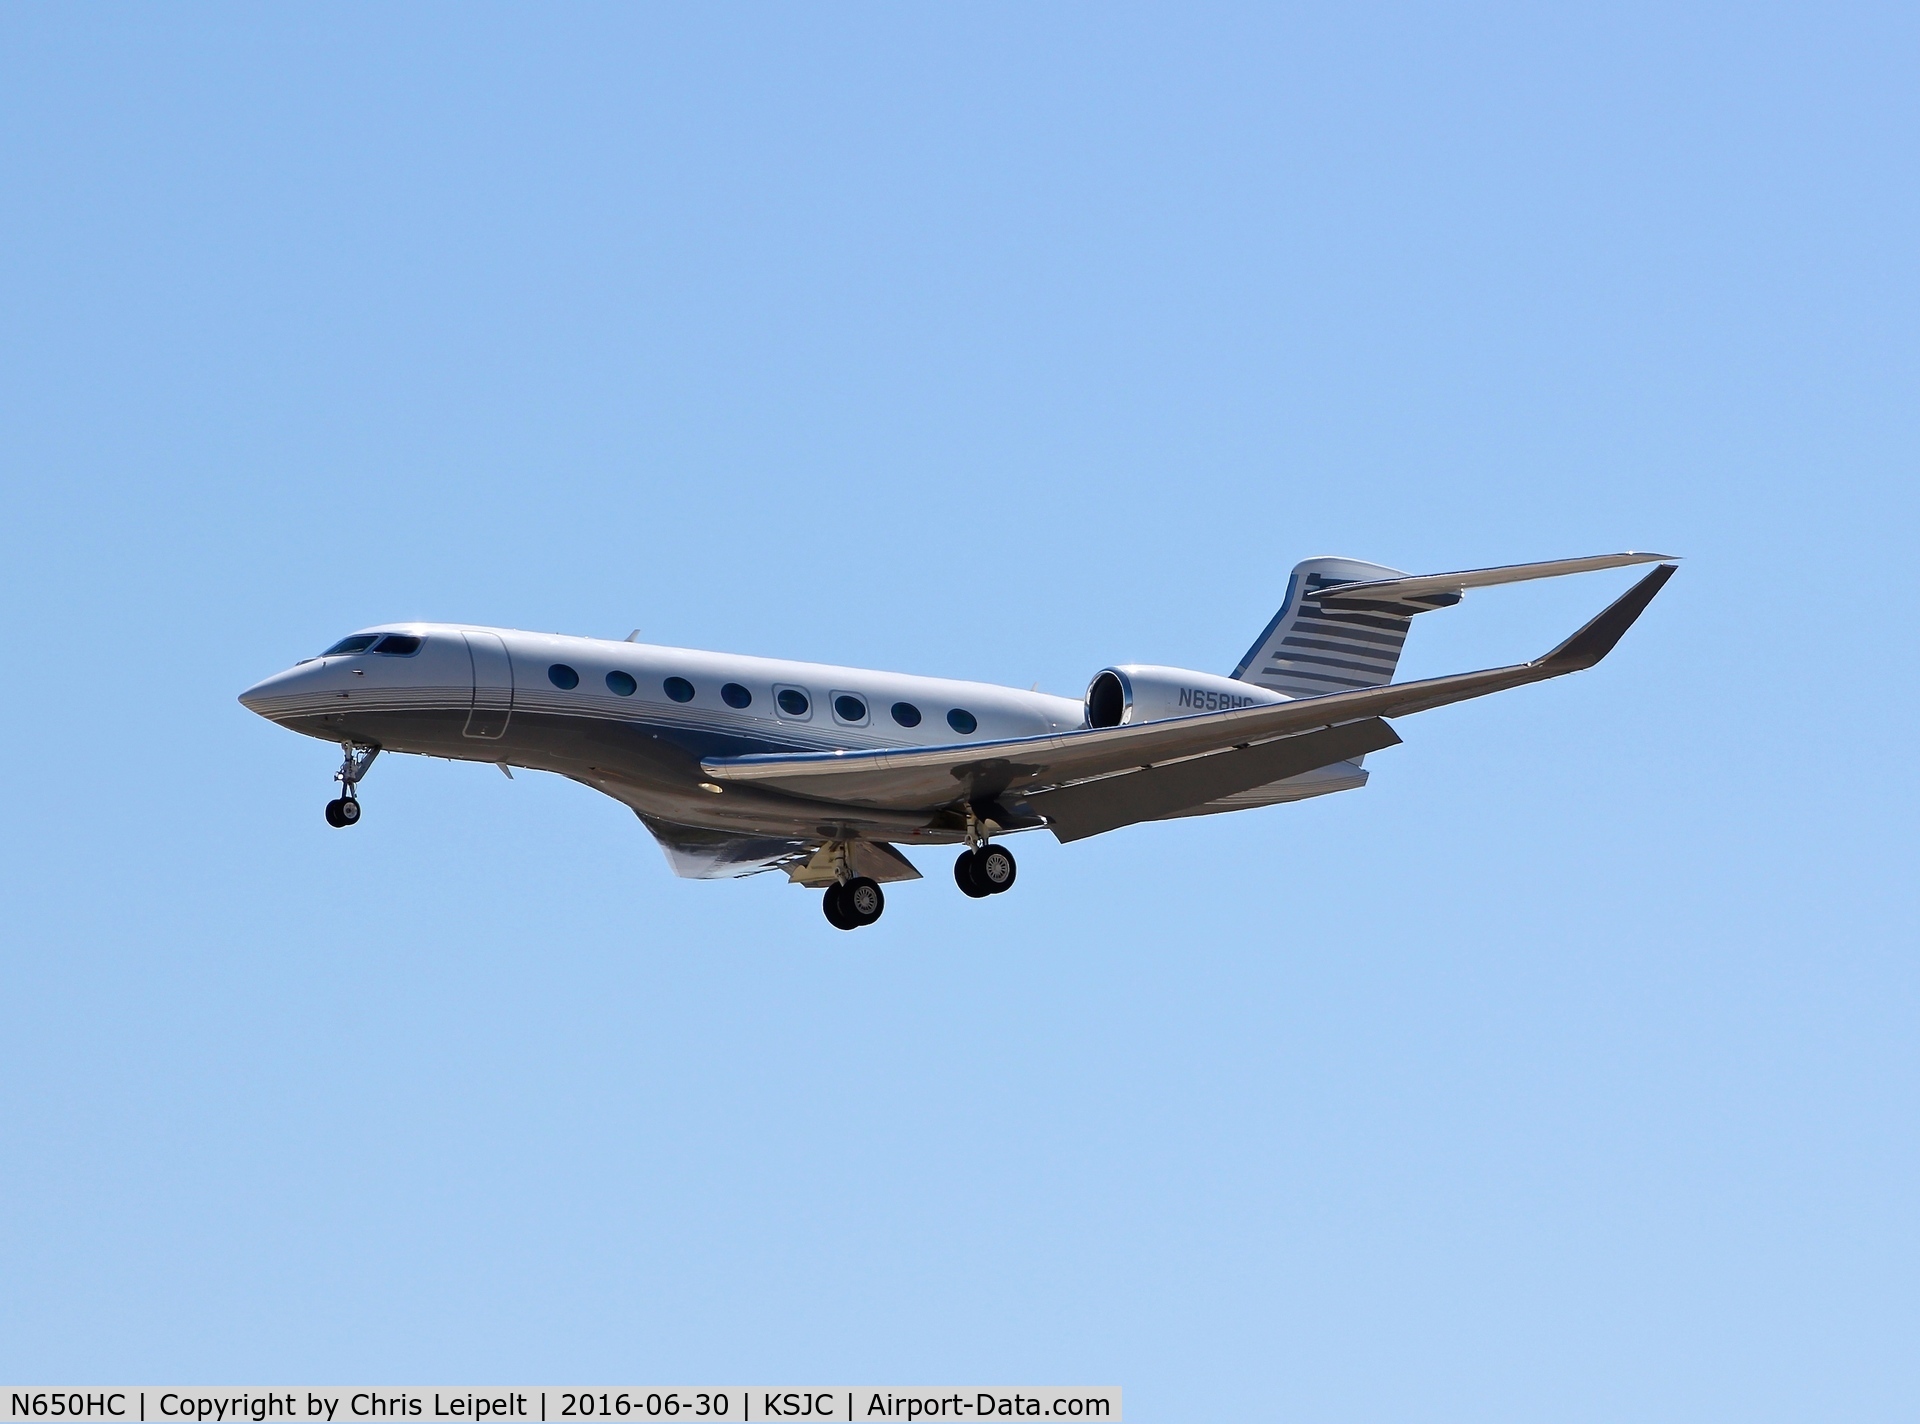 N650HC, 2014 Gulfstream Aerospace G650 (G-VI) C/N 6097, Wells Fargo Bank (Salt Lake City, UT) 2014 Gulfstream G650 landing at San Jose International Airport, CA.